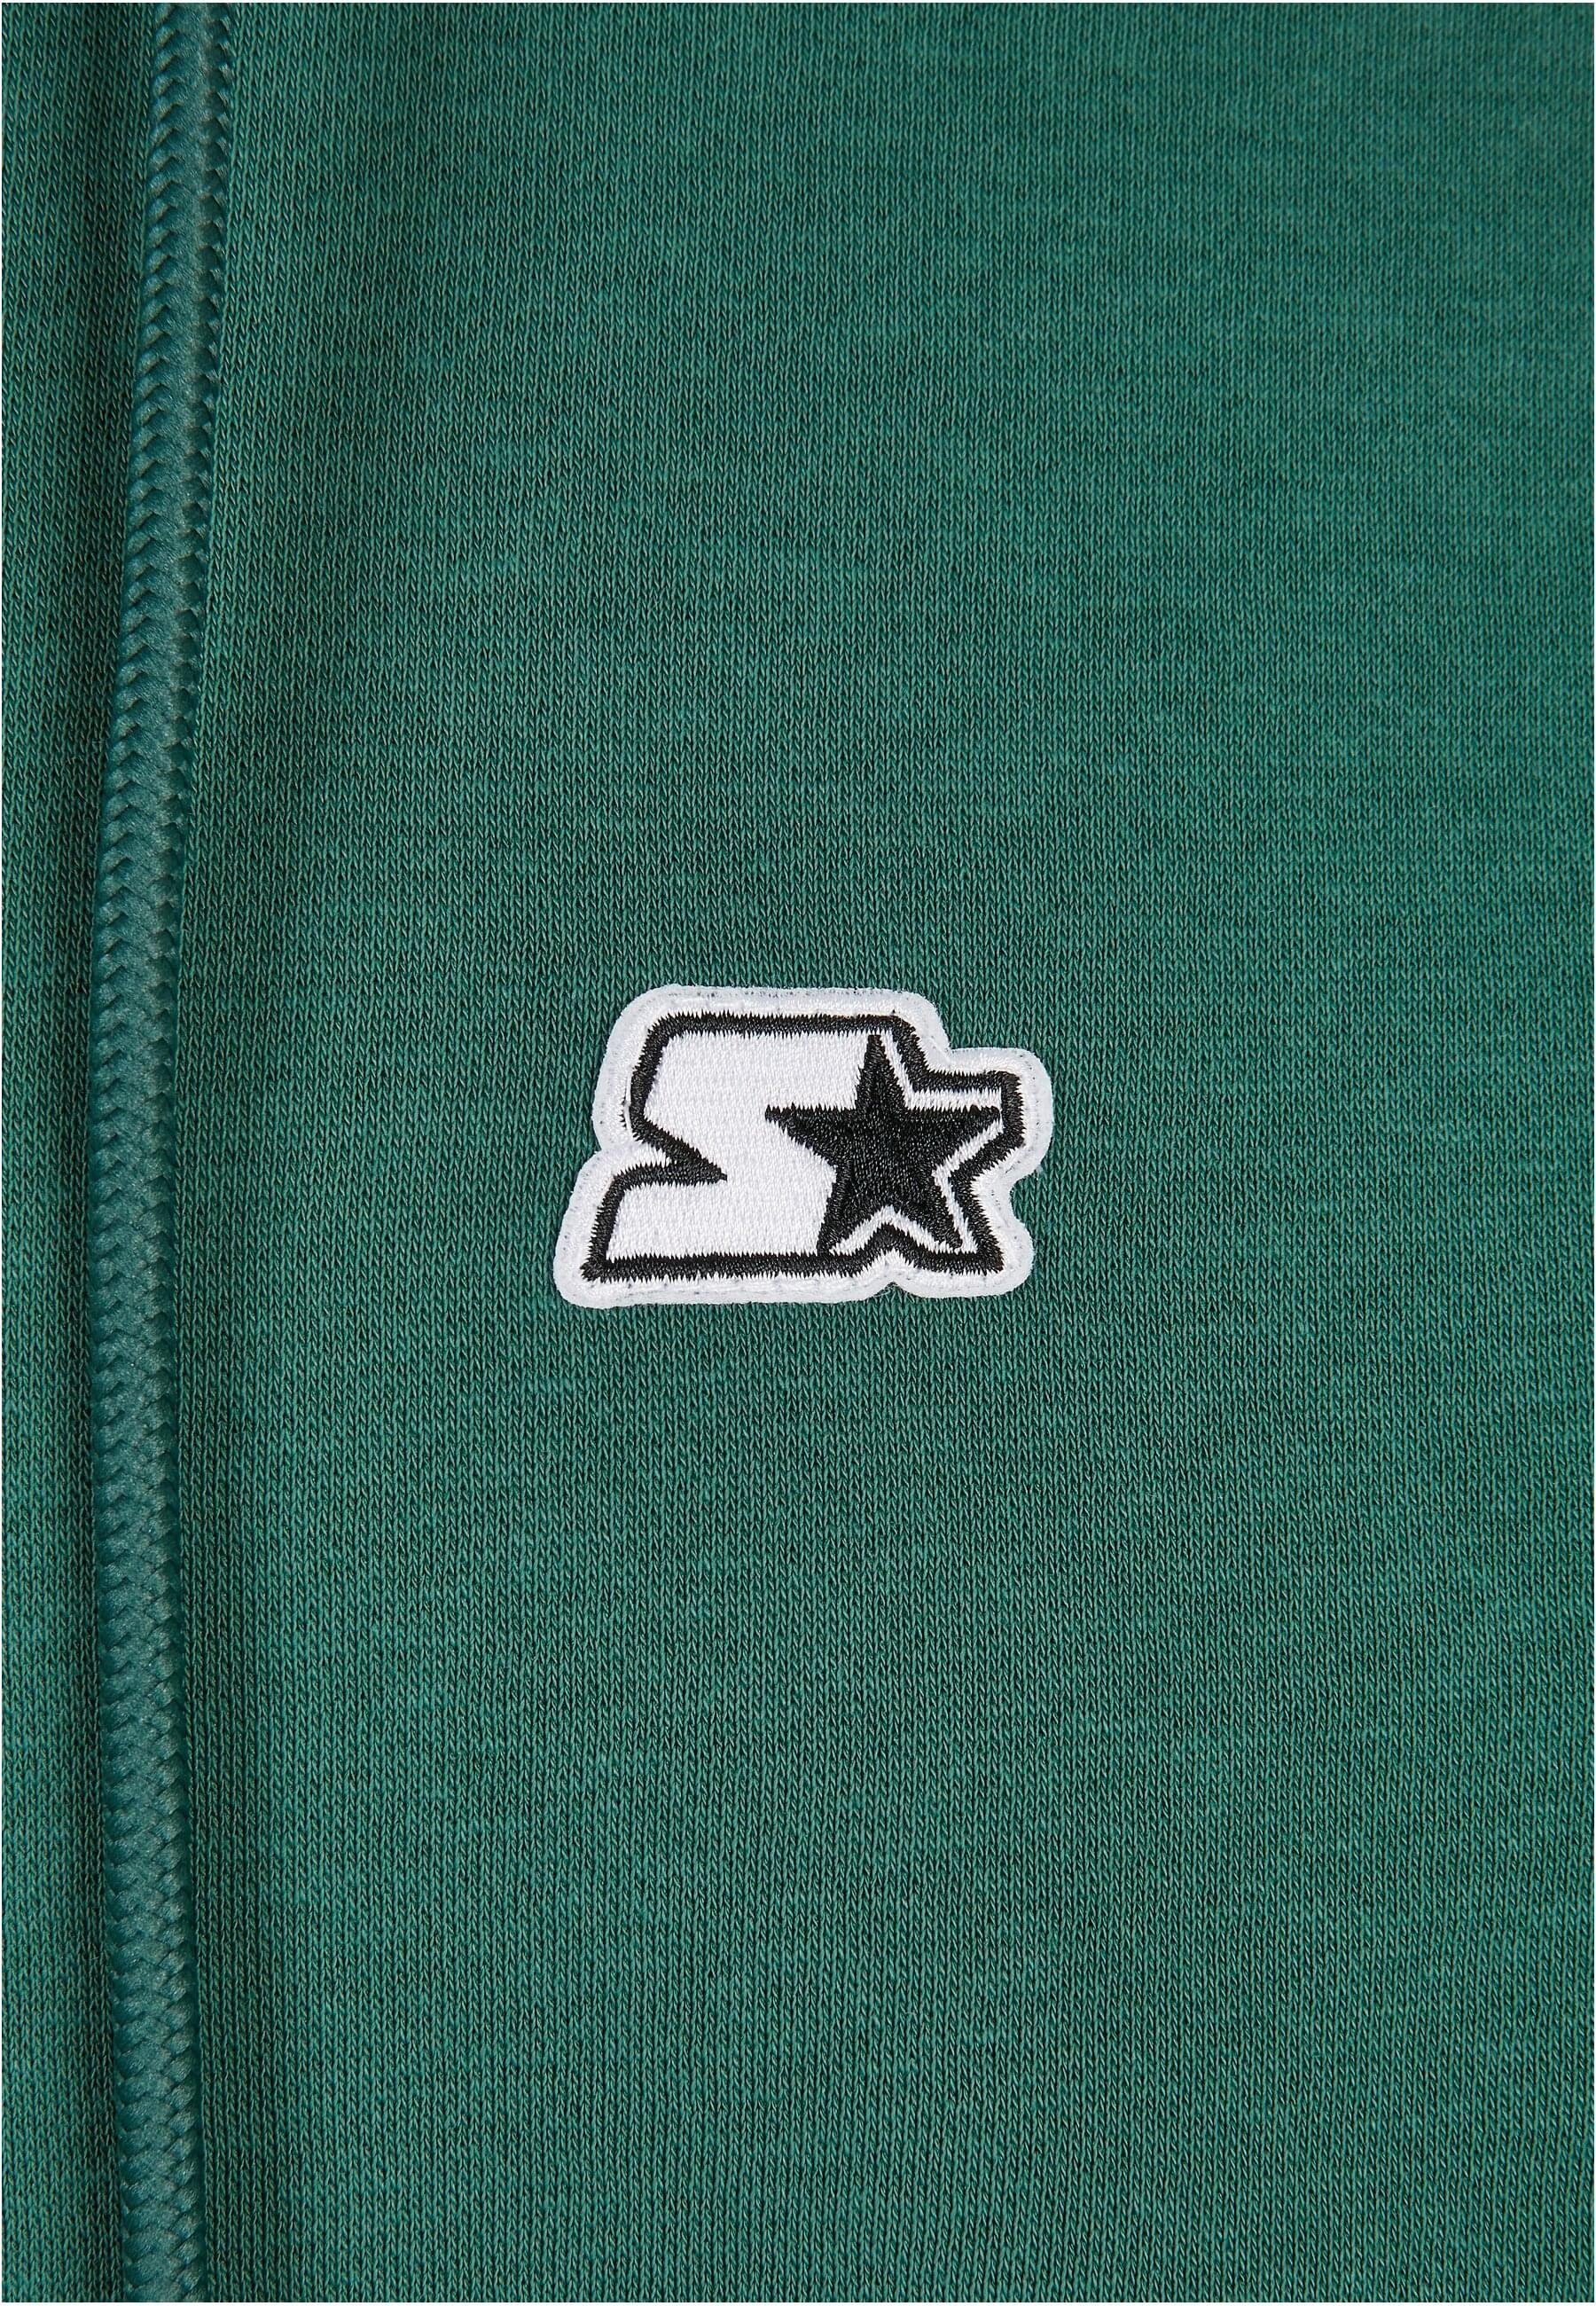 Starter Black Label darkfreshgreen (1-tlg) Sweater Herren Essential Hoody Starter Starter